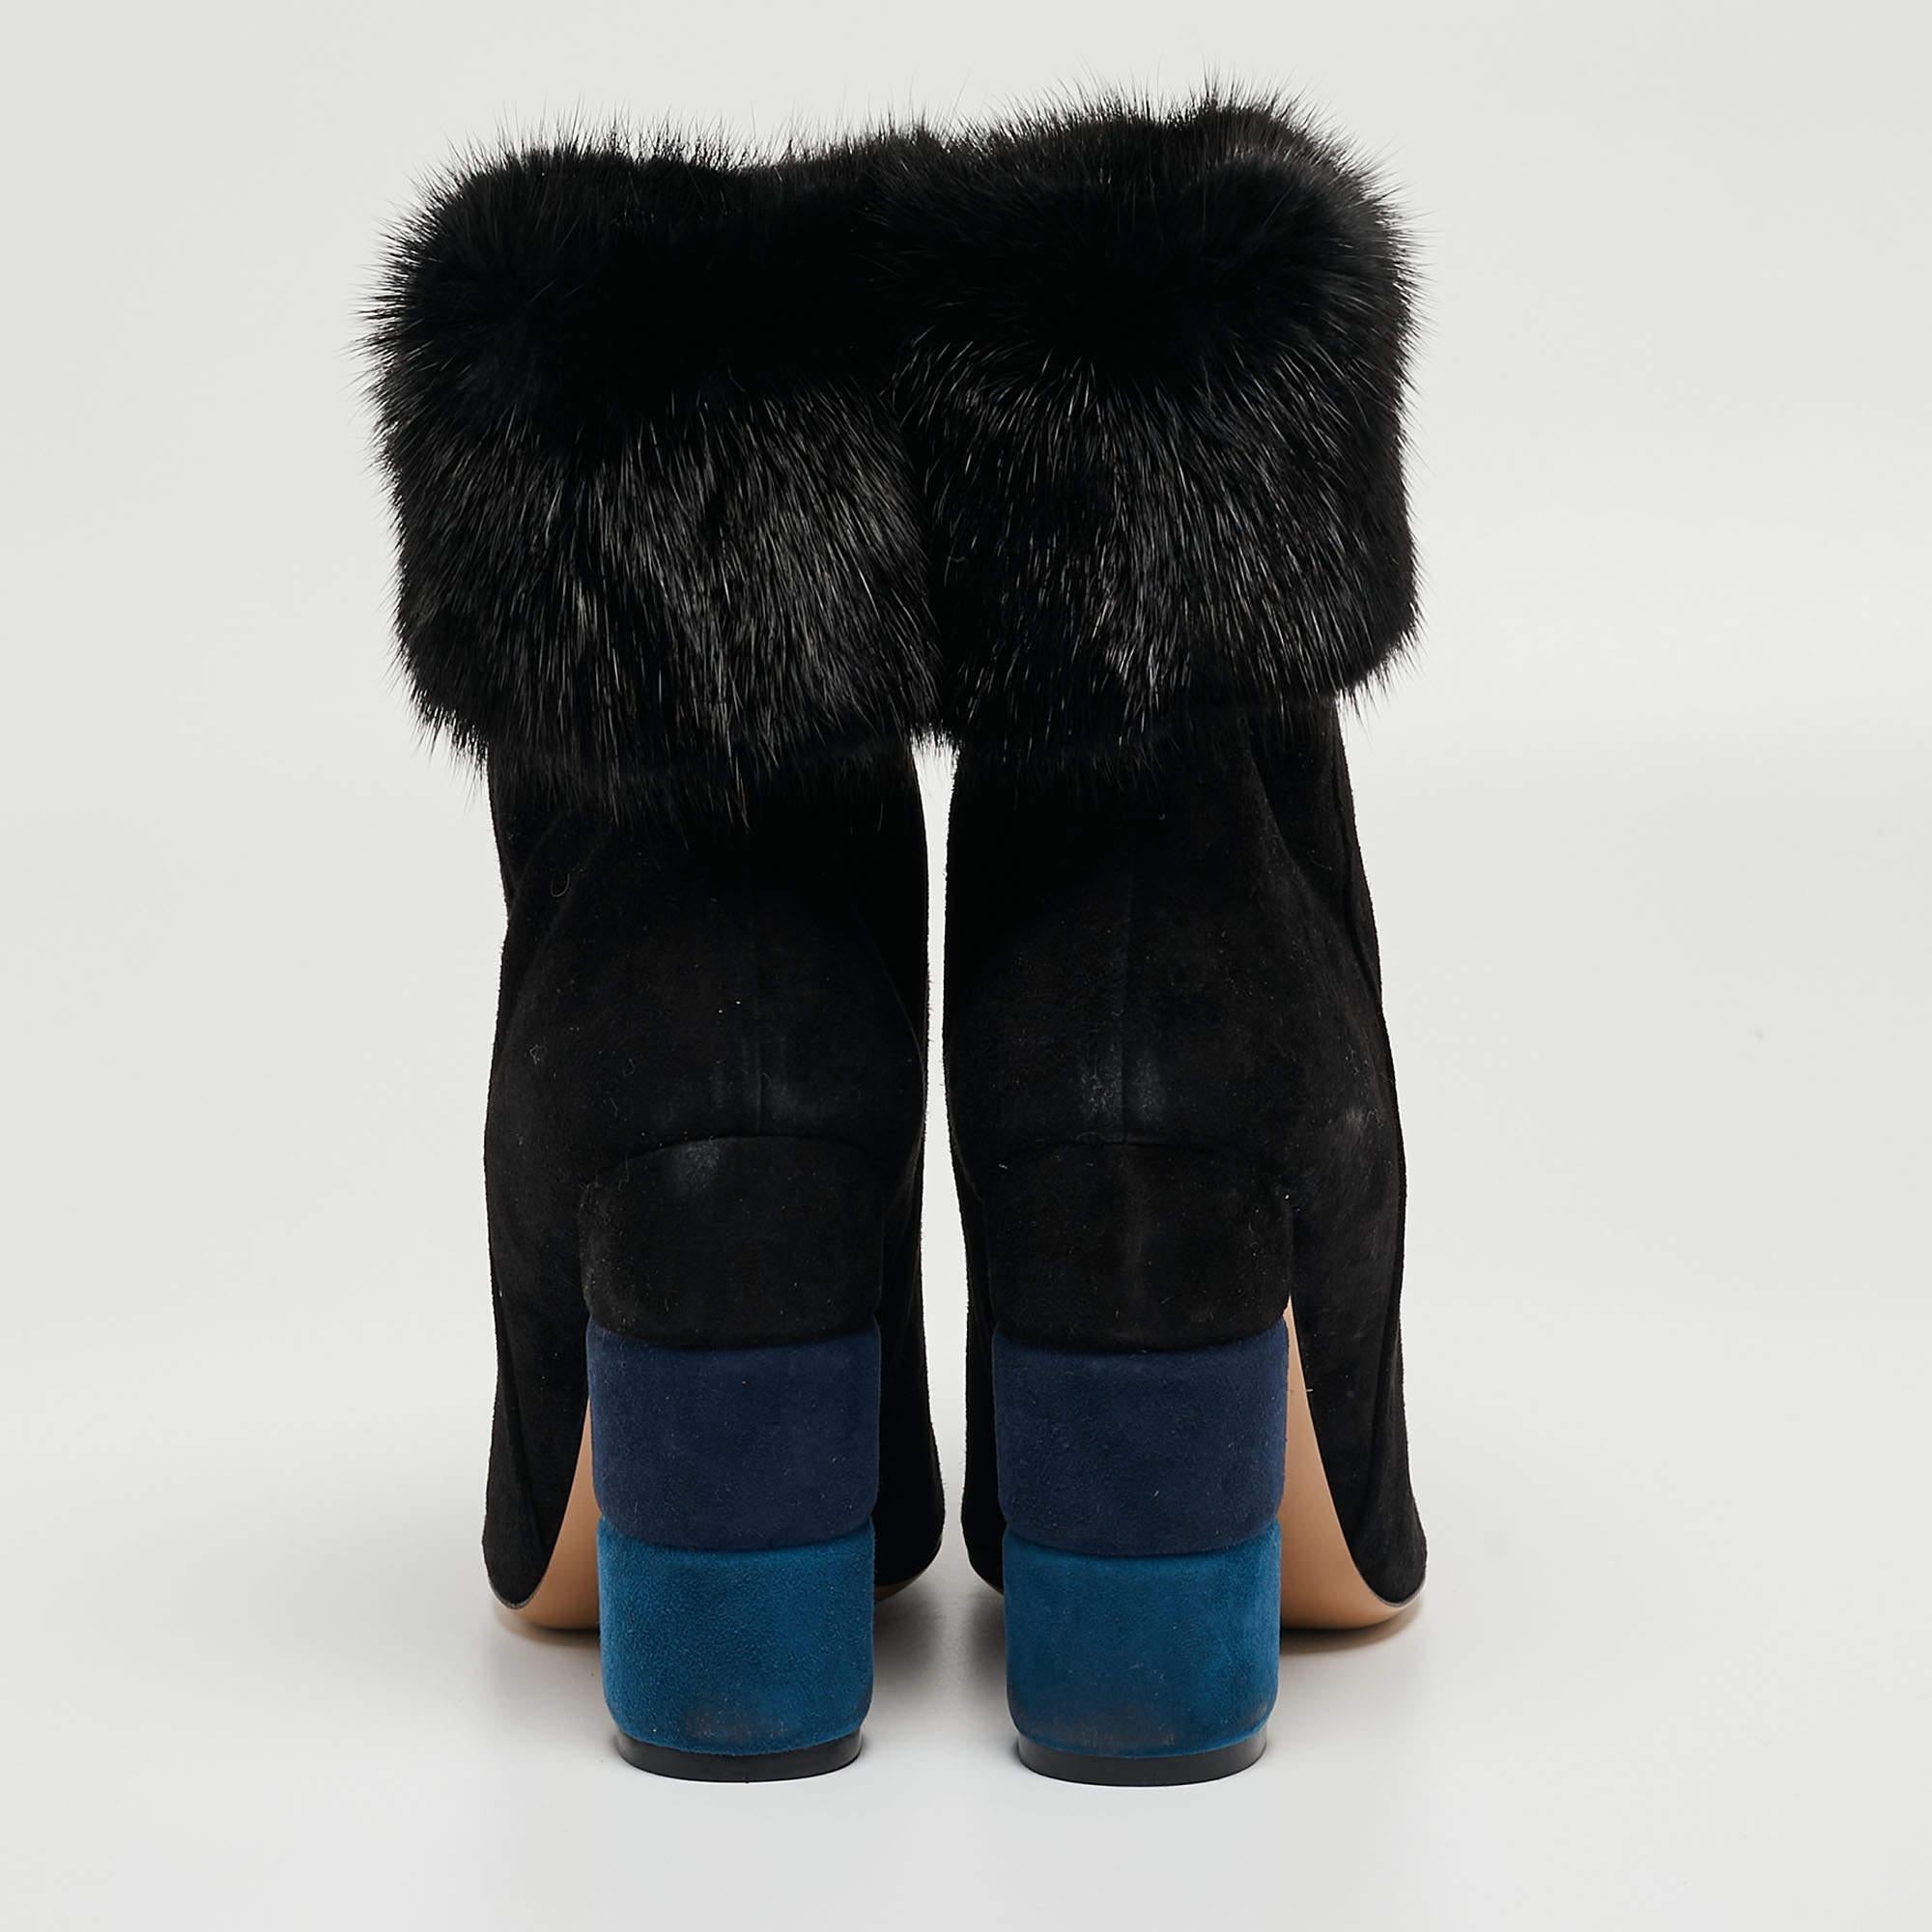 Salvatore Ferragamo Black Suede and Fur Loris Ankle Boots Size 40 For Sale 6